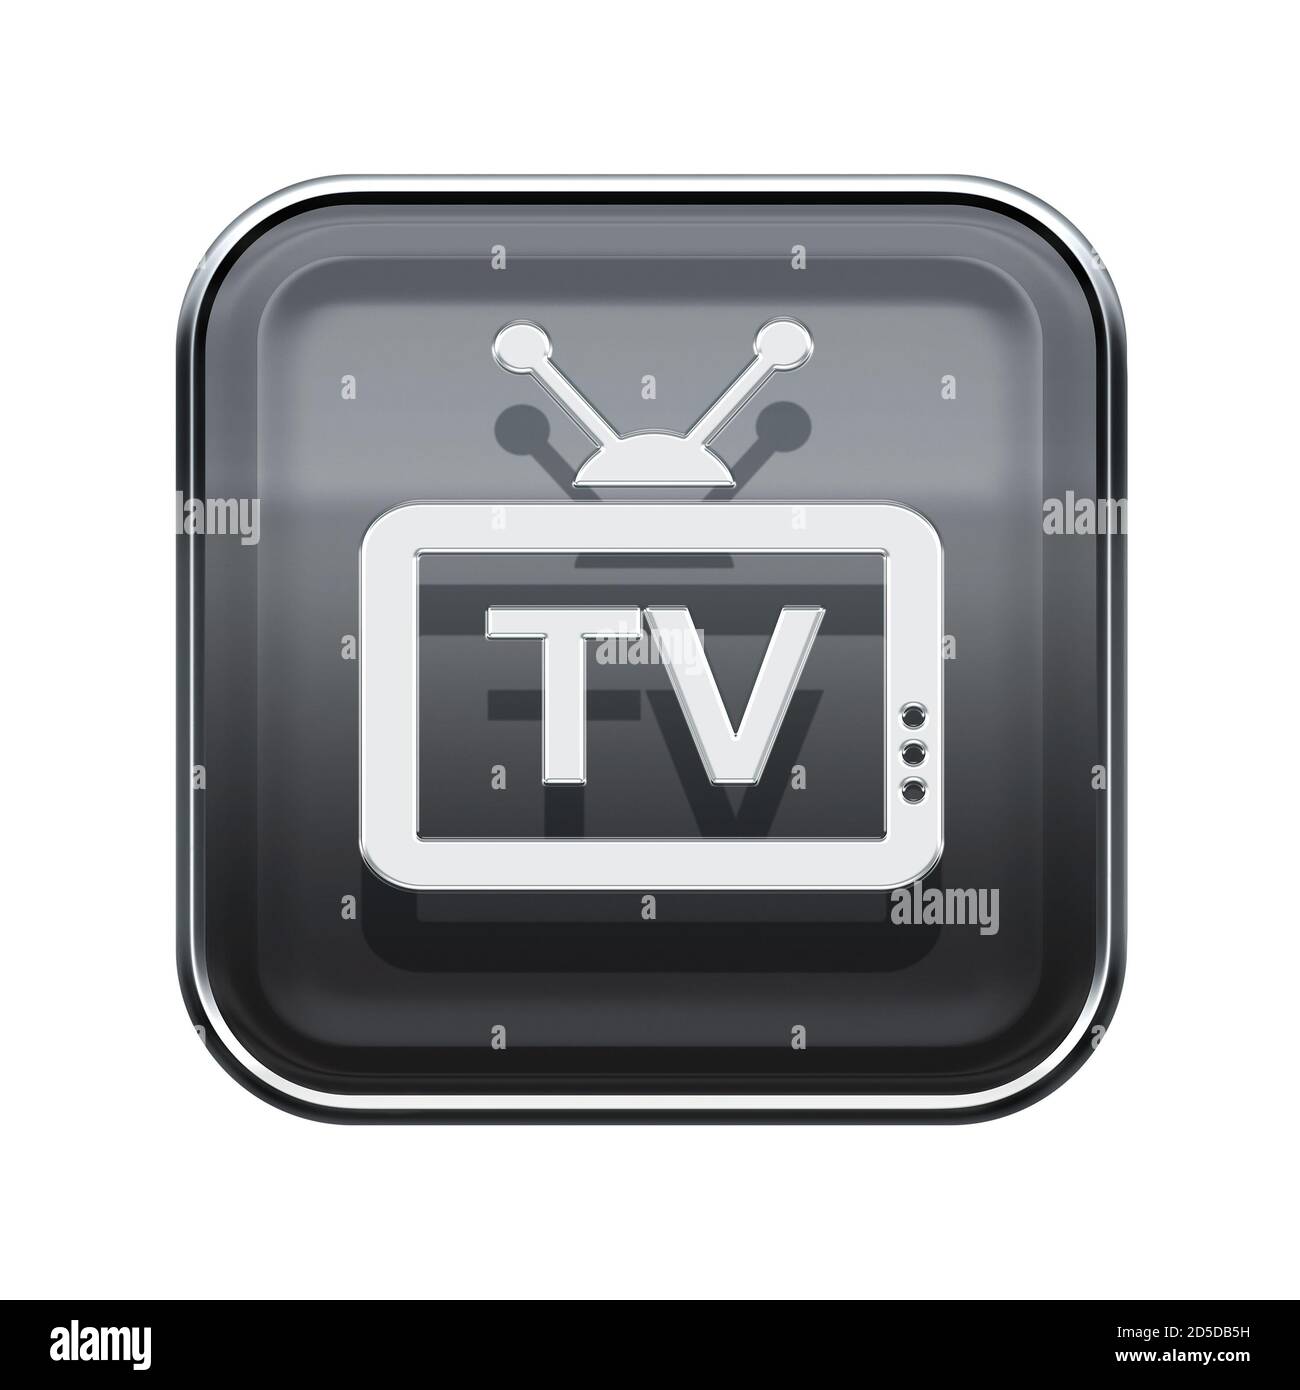 TV icon glossy grey, isolated on white background Stock Photo